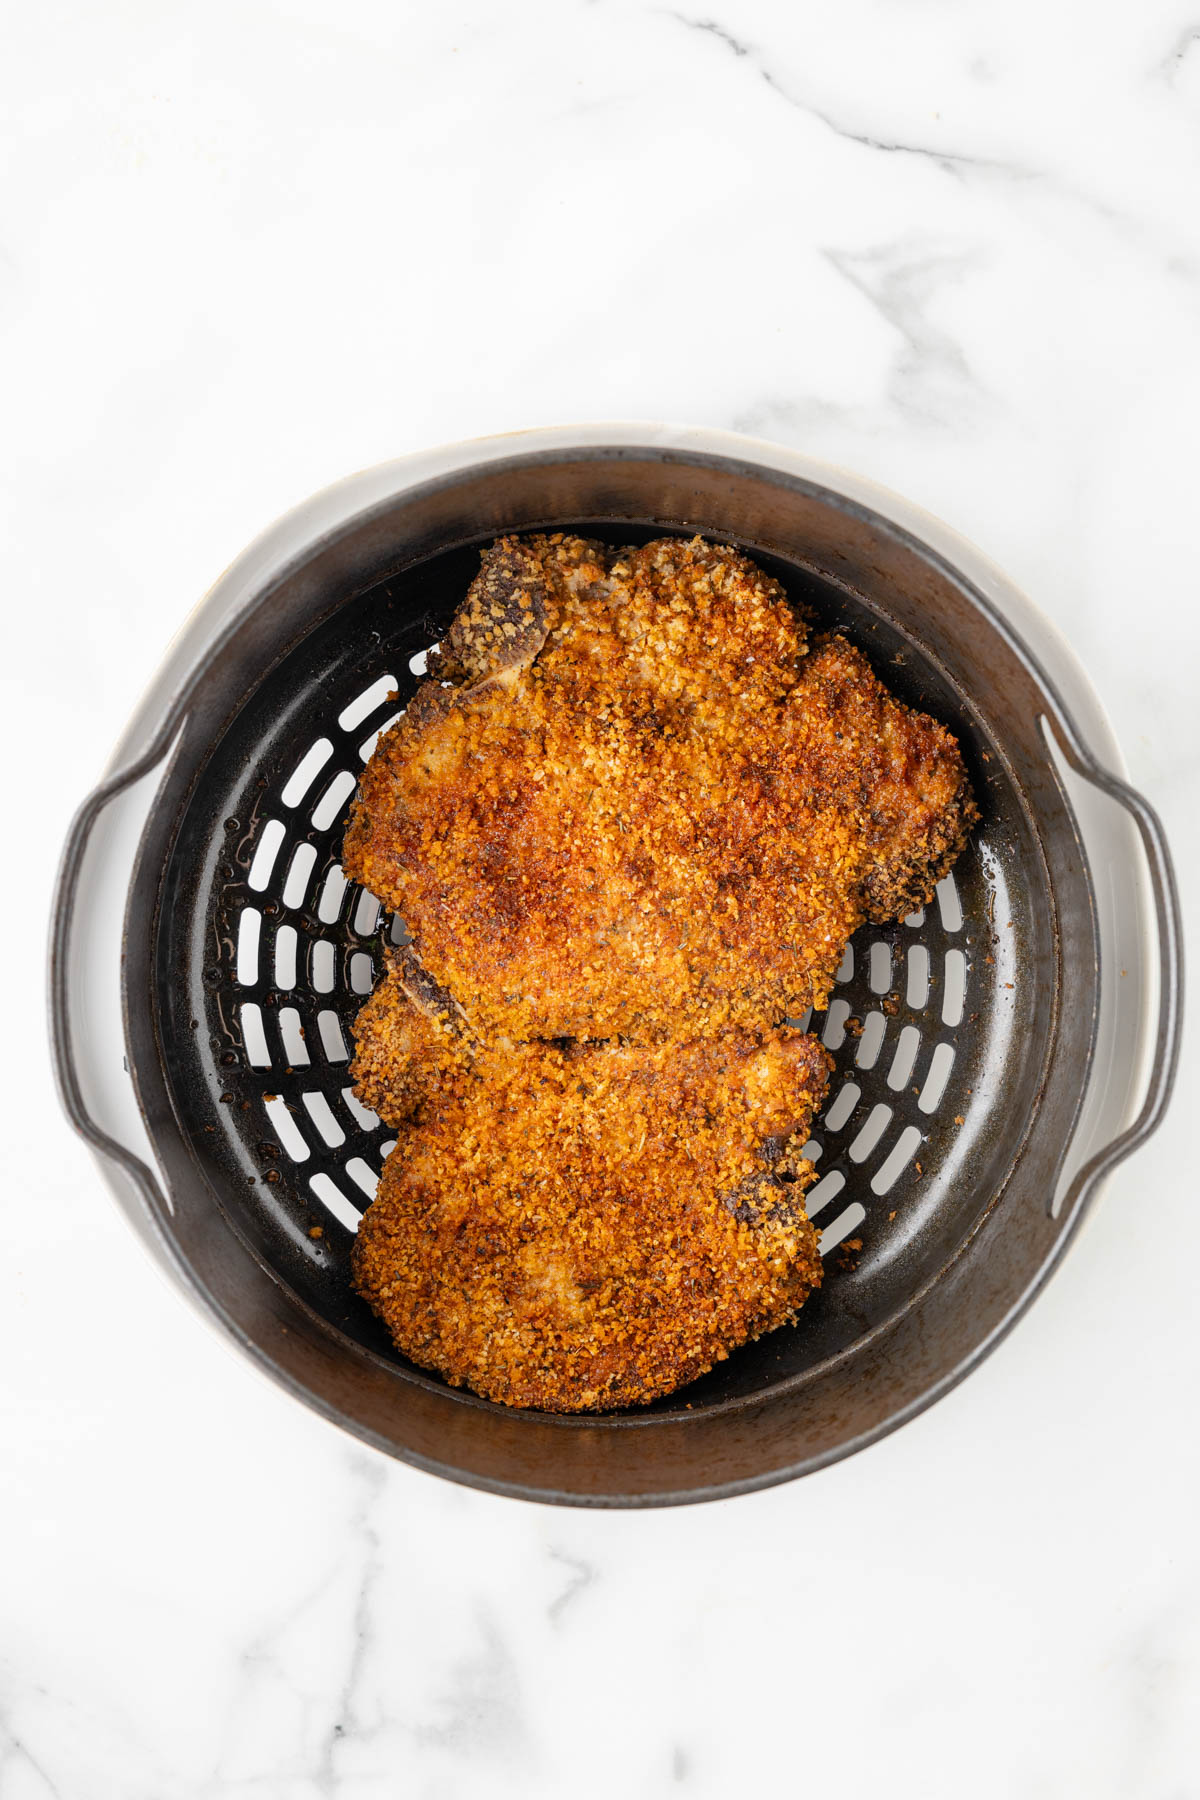 Air fryer fried pork chops are displayed in an air fryer basket. 